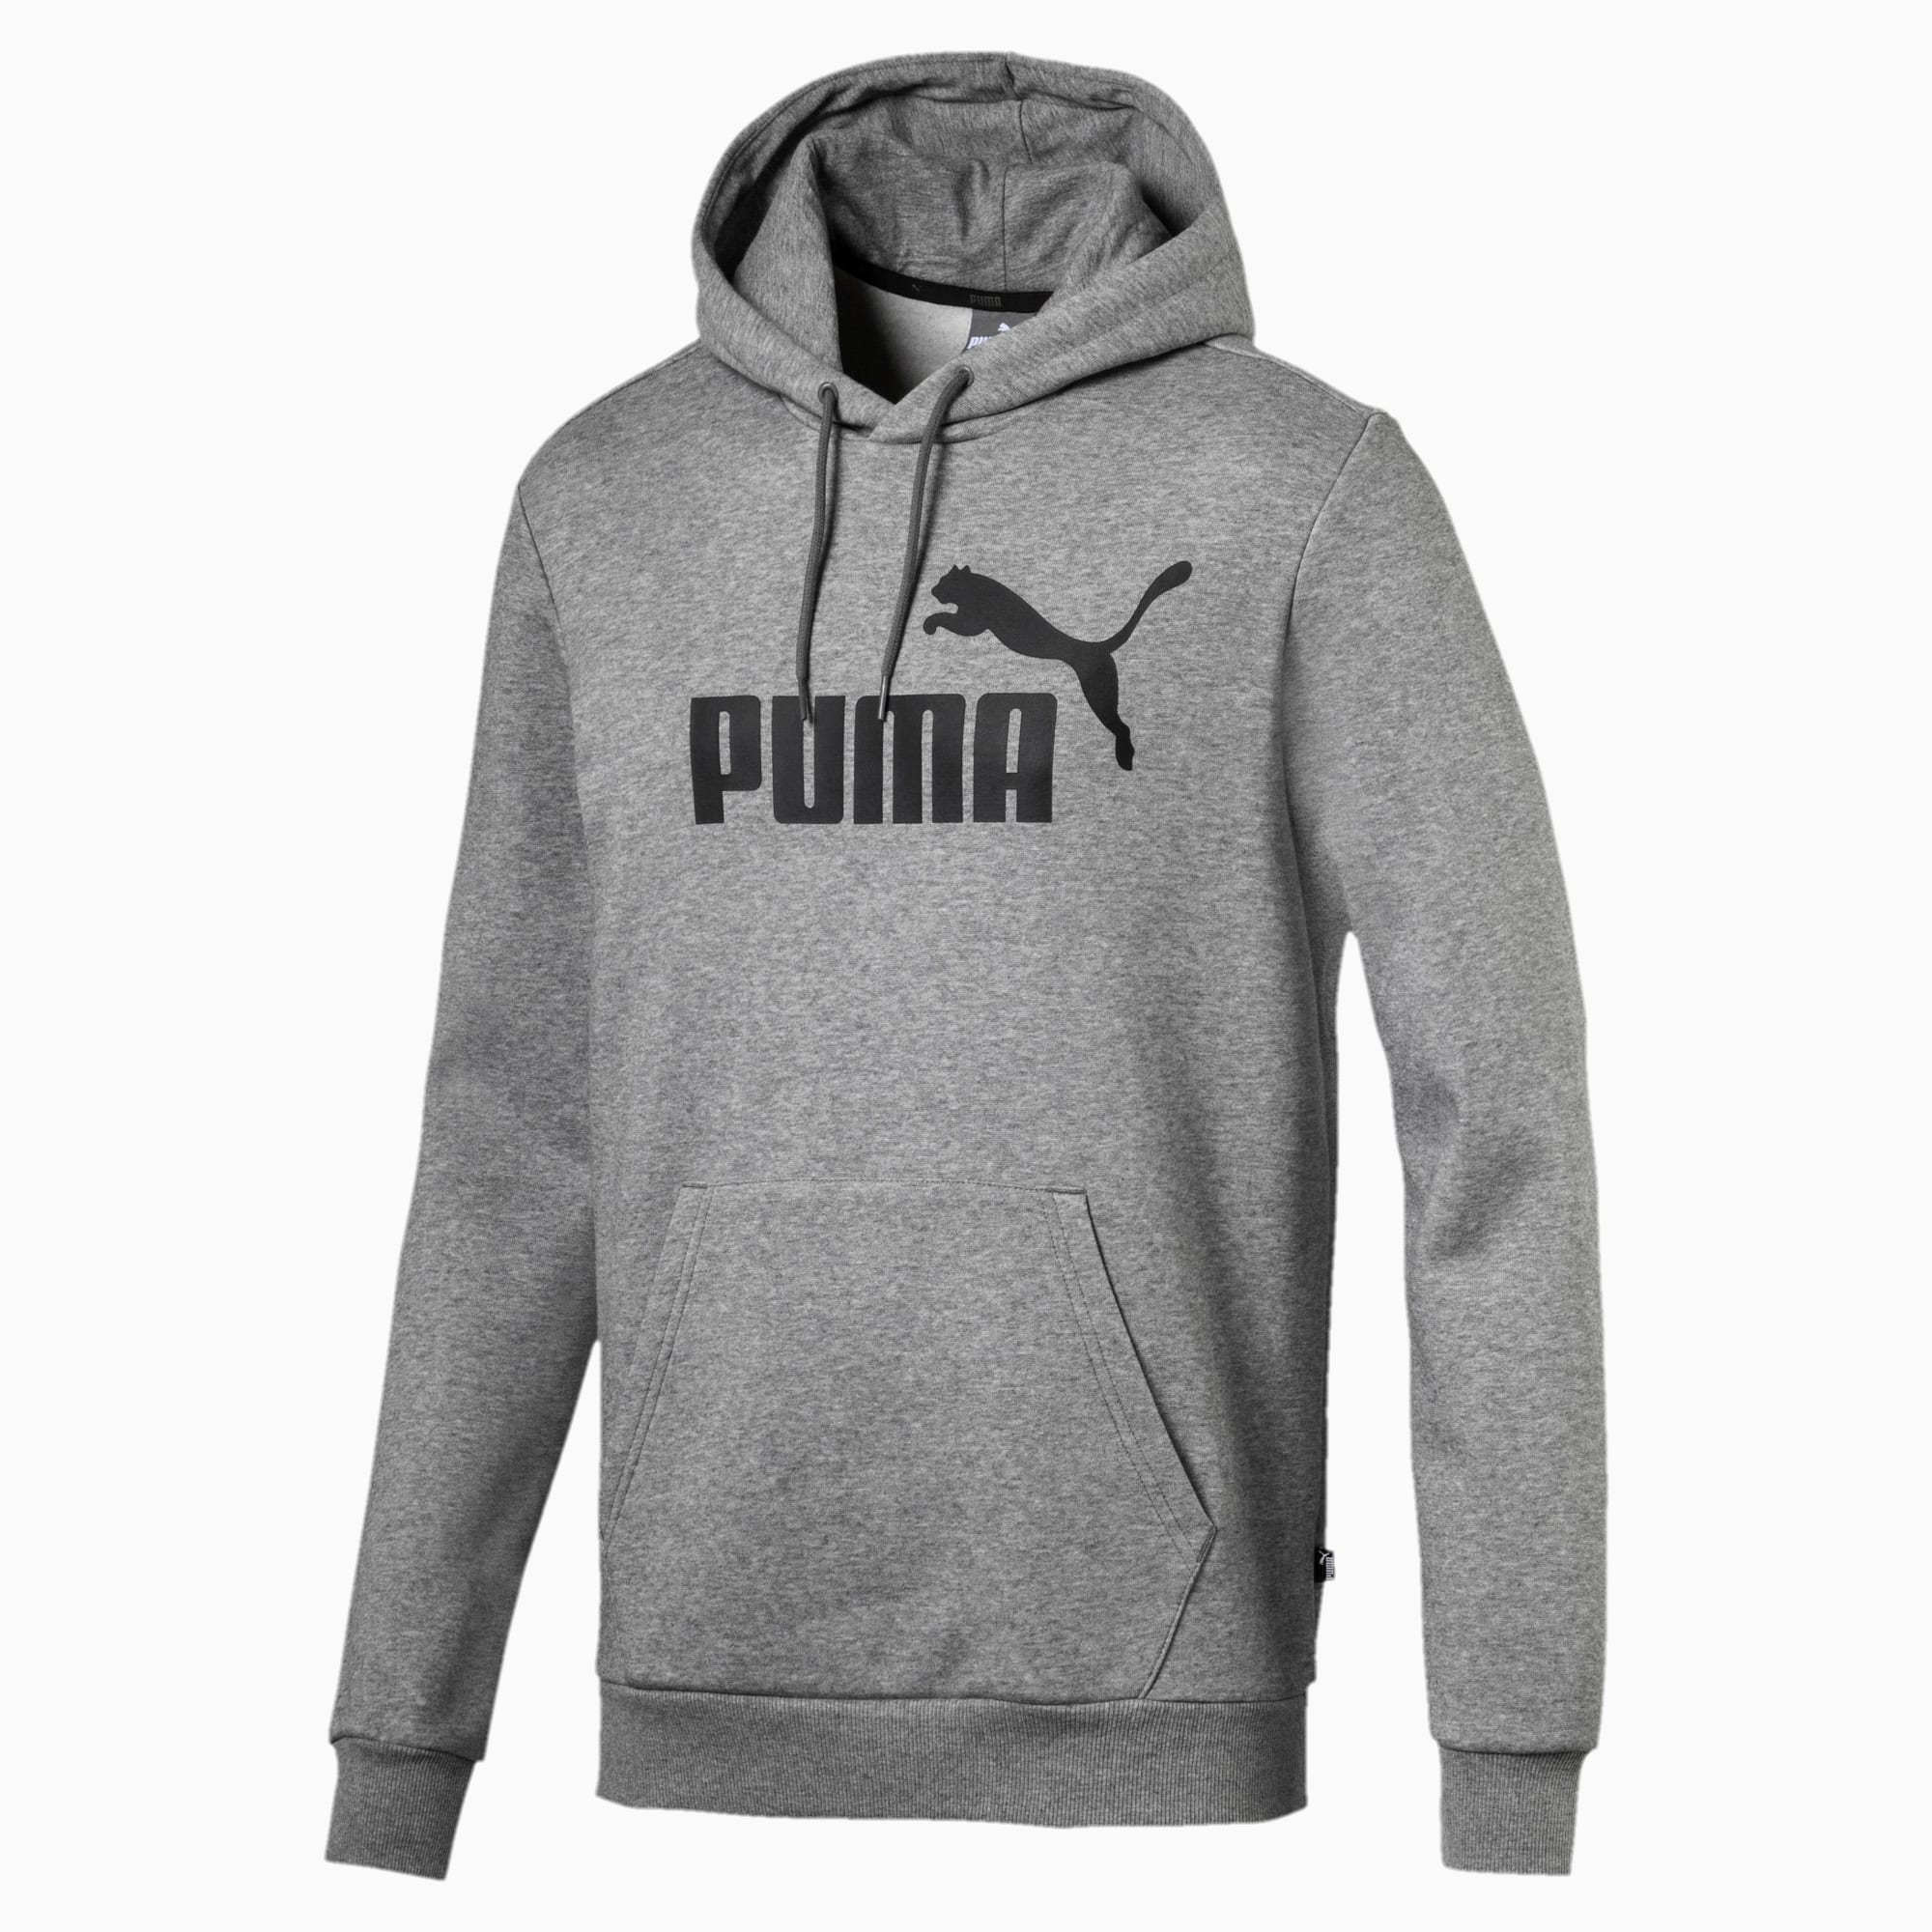 mens black puma hoodie